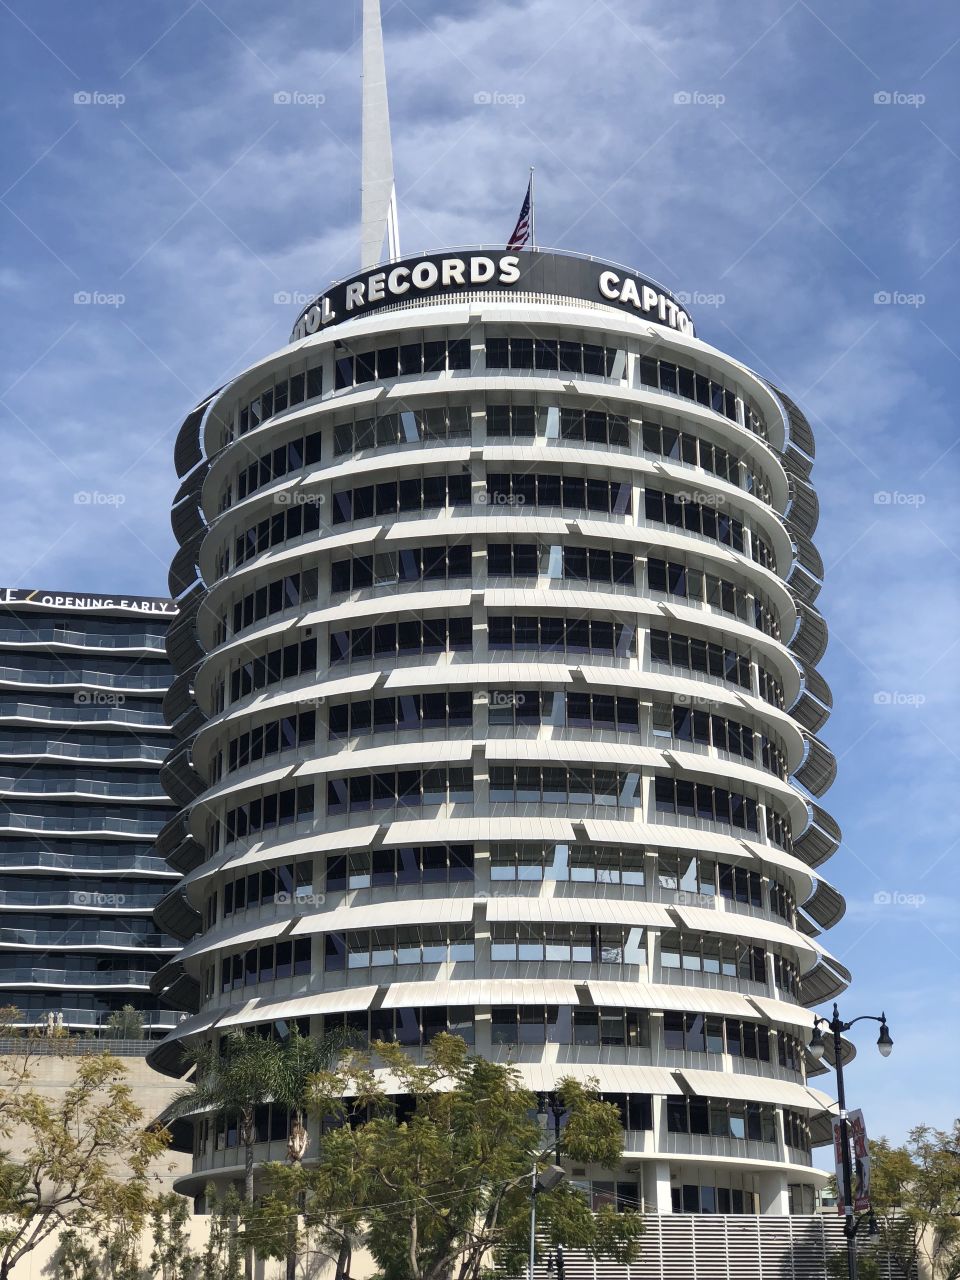 Capitol Records Los Angeles